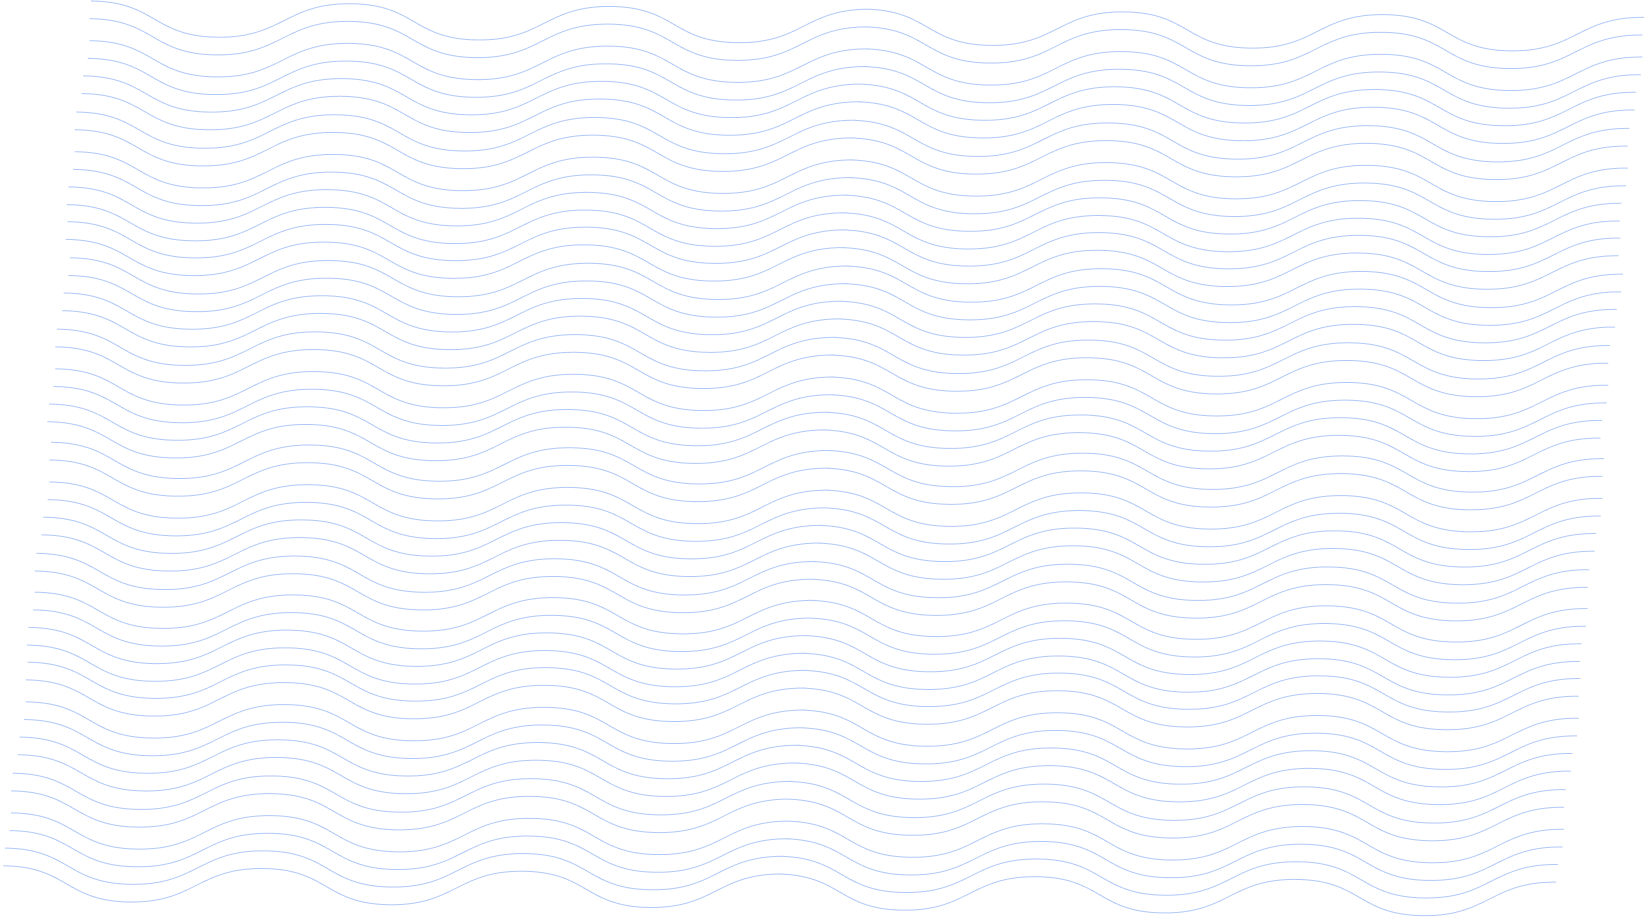 wave background